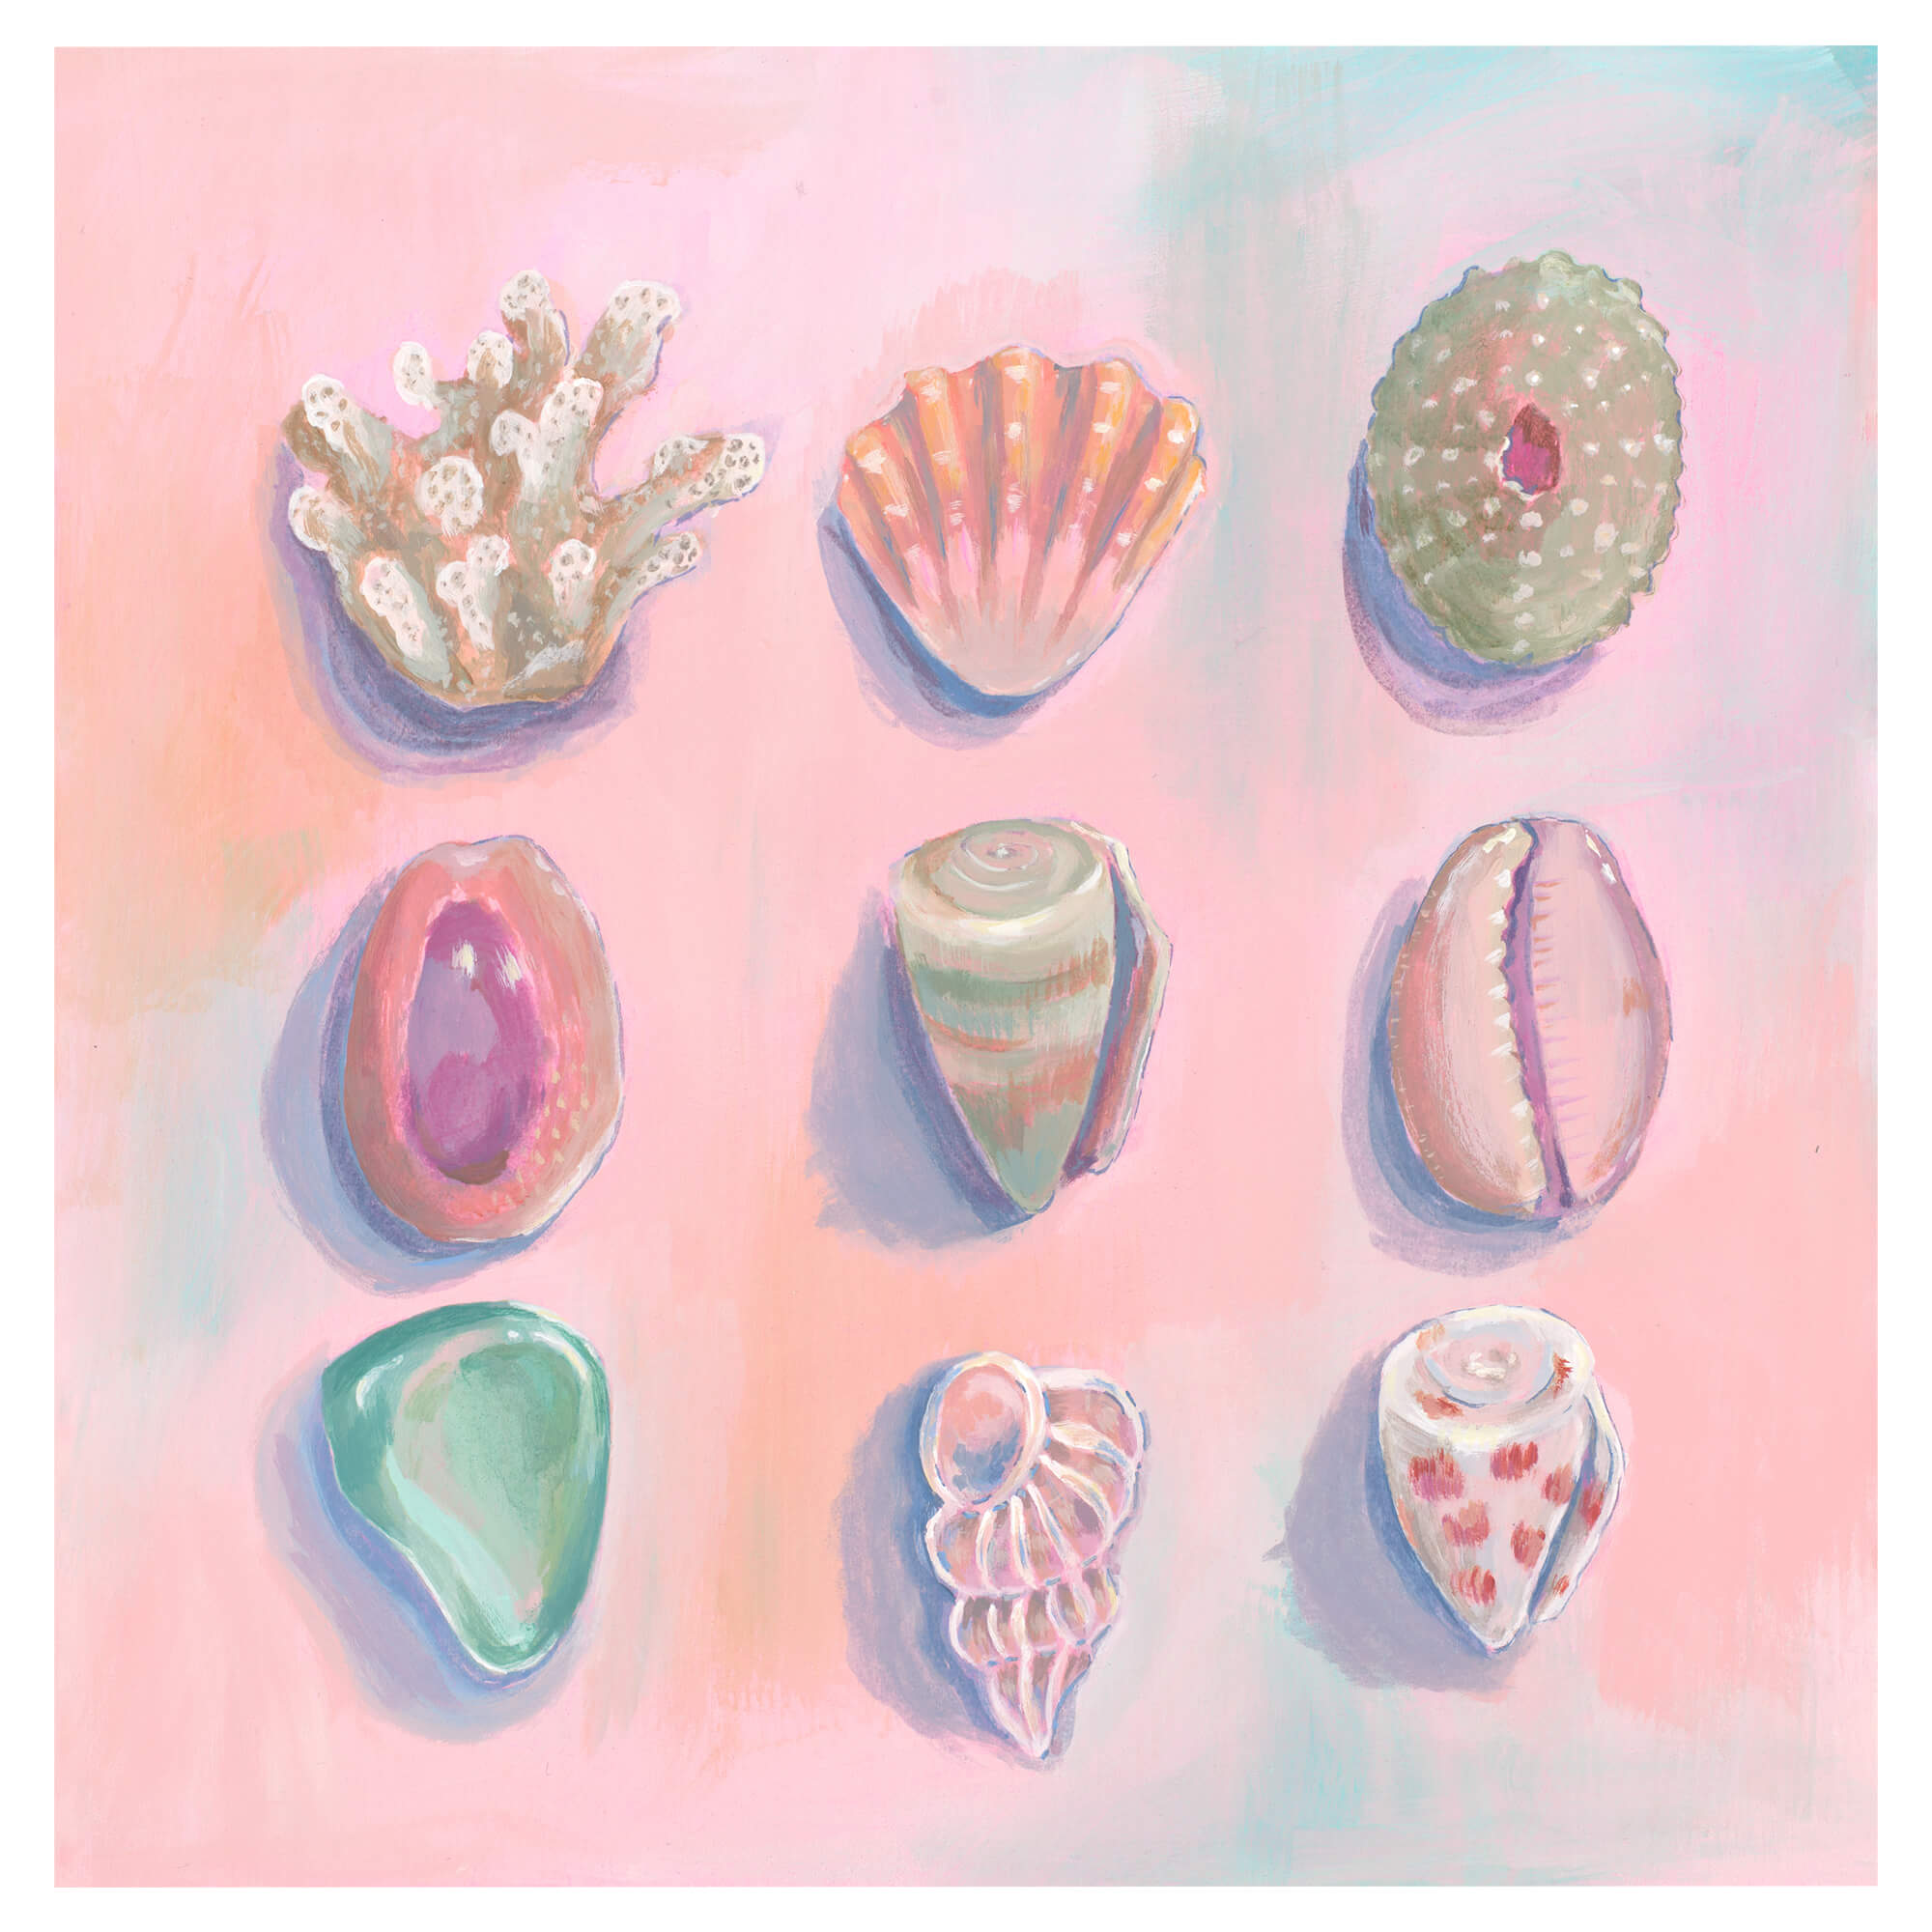 Stunning pink and teal-hued seashells by Hawaii artist Lindsay Wilkins